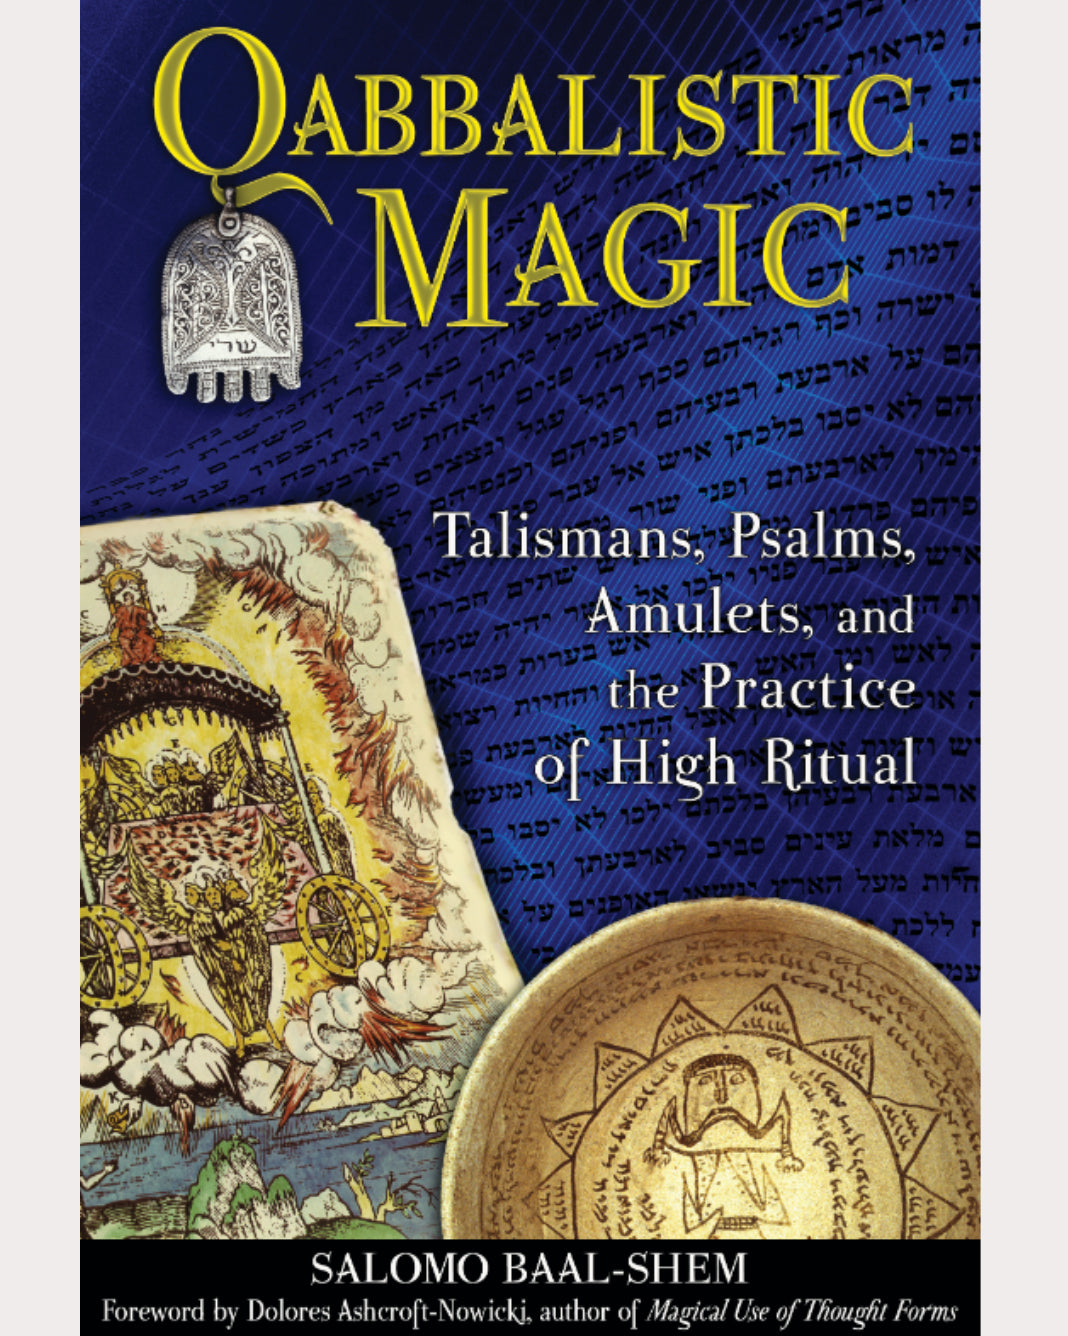 Qabbalistic Magic